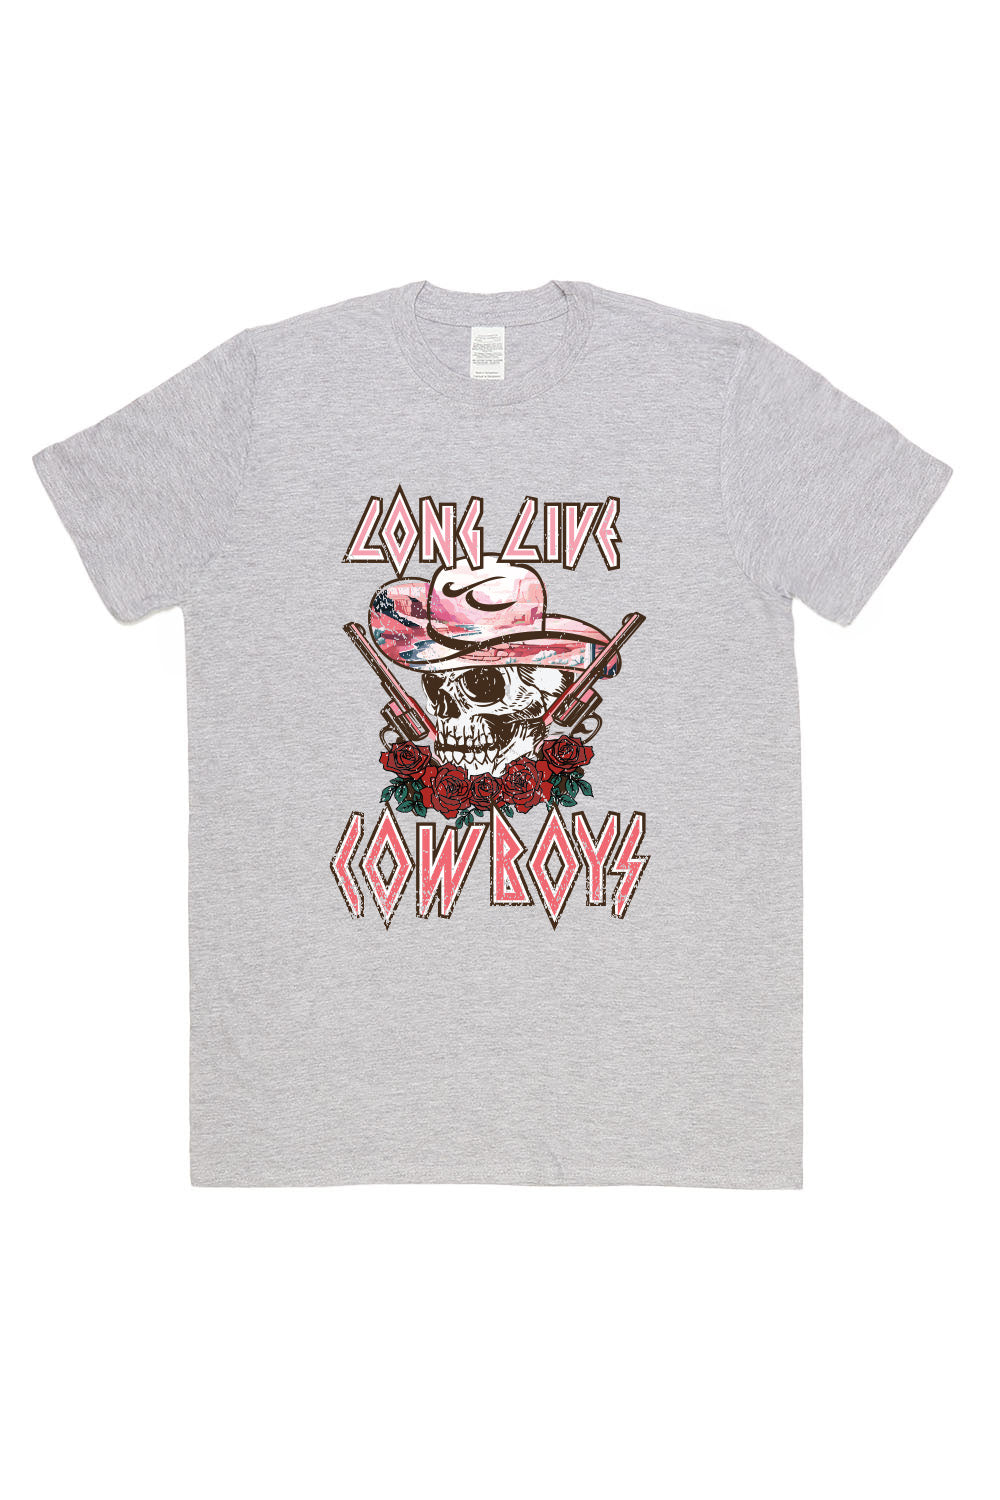 Long Live Cowboy T-Shirt in Ash Grey (Custom Packs)